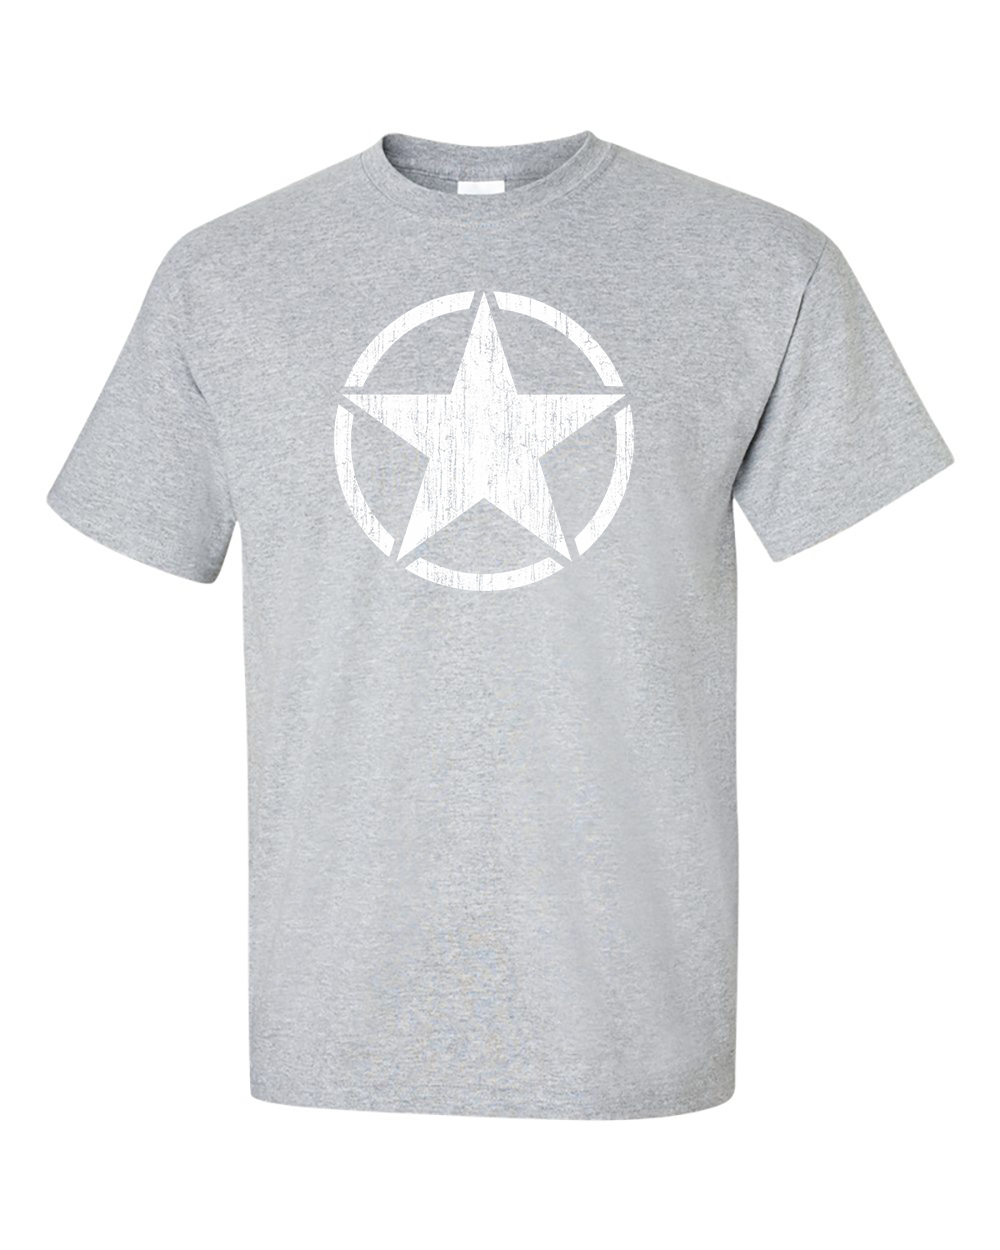 Distressed US Army WW2 White Star Allies T-Shirt